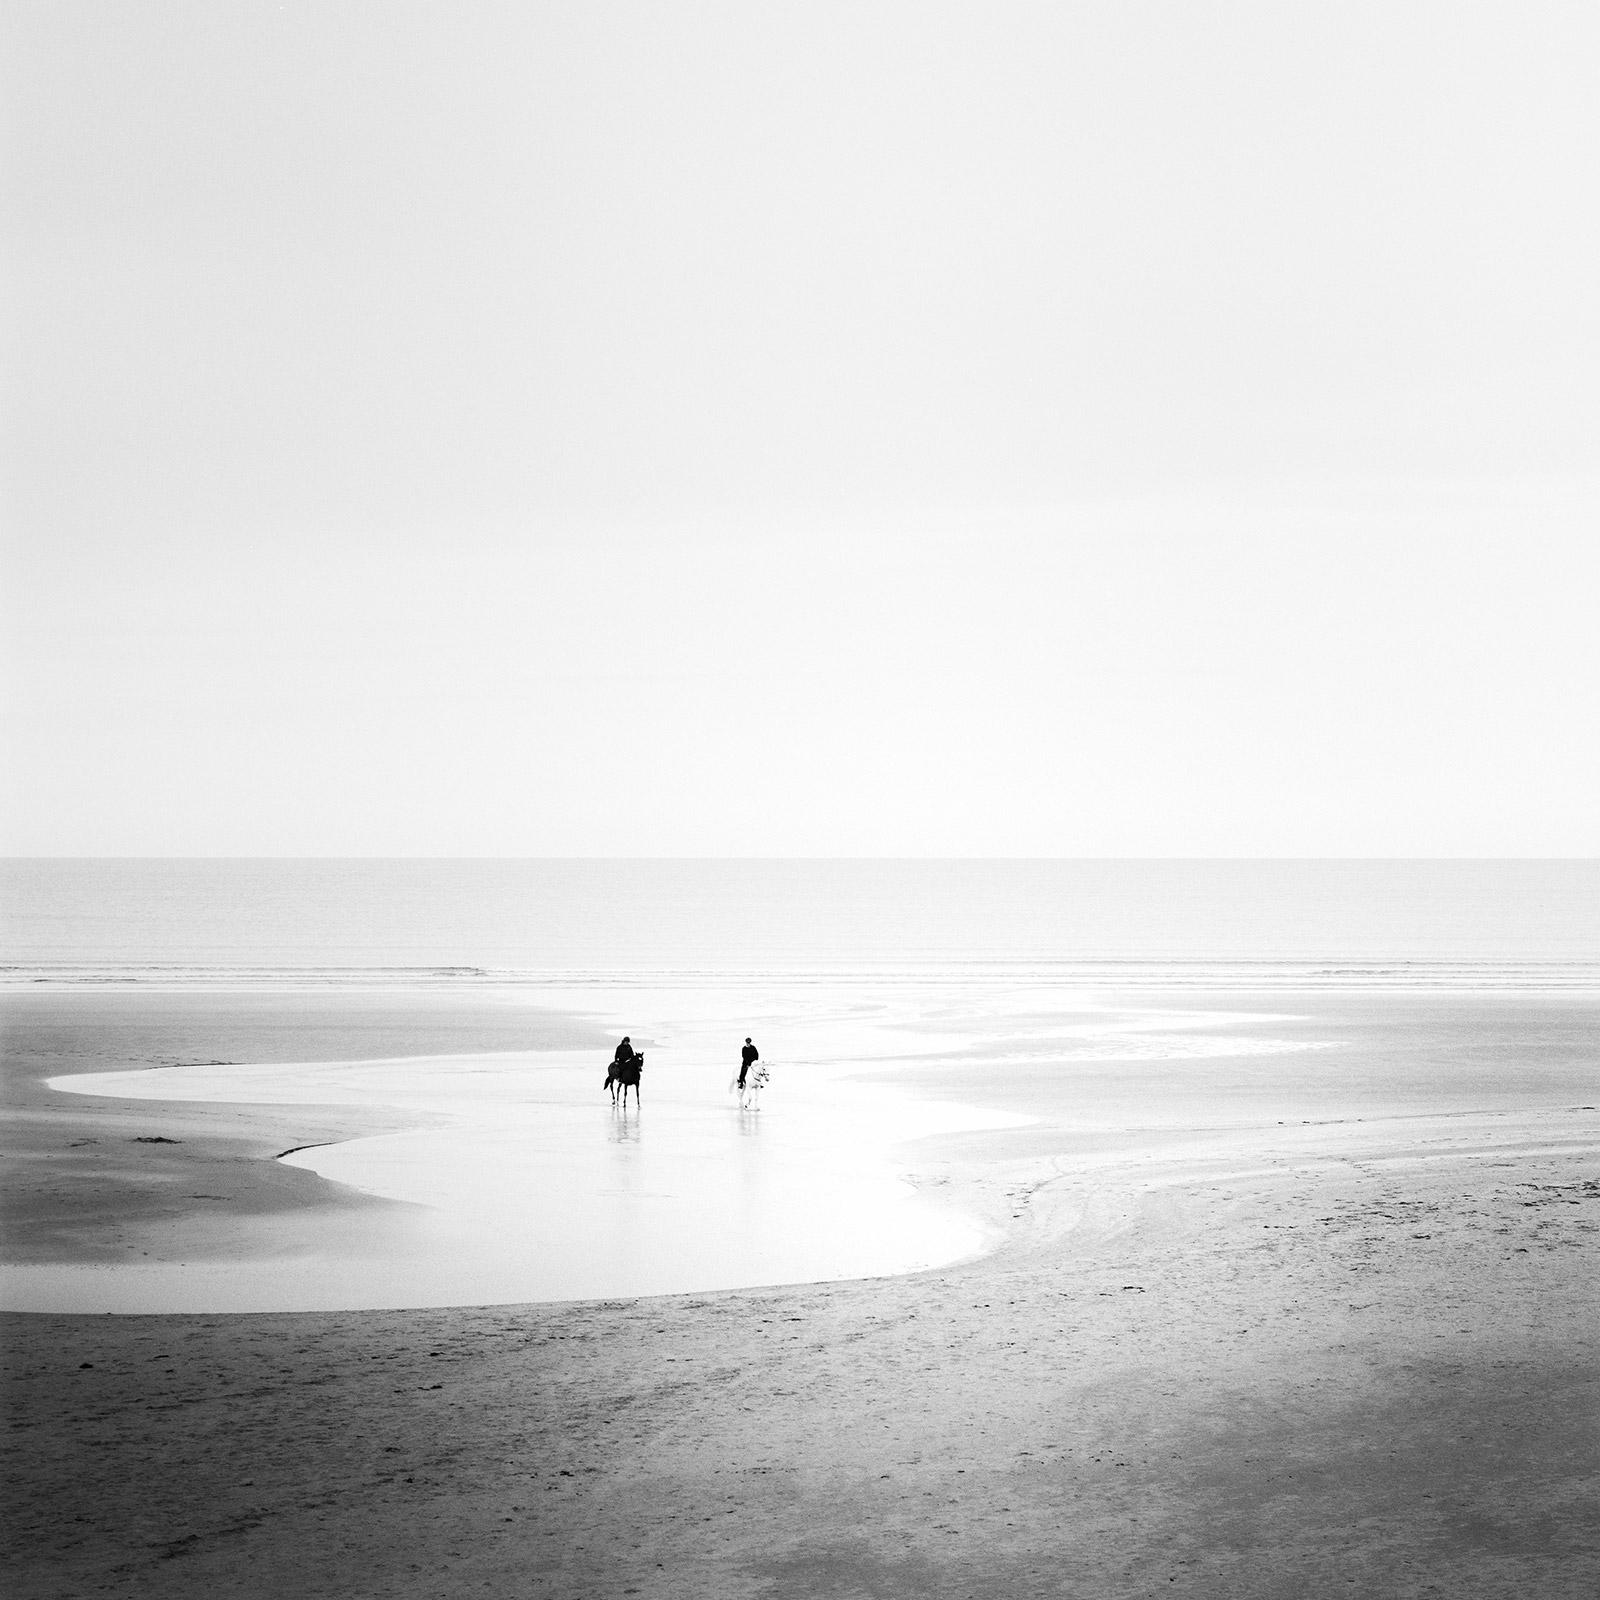 Gerald Berghammer Black and White Photograph - Sunday Morning, Horse Riding, Beach, Ireland, black and white art photography